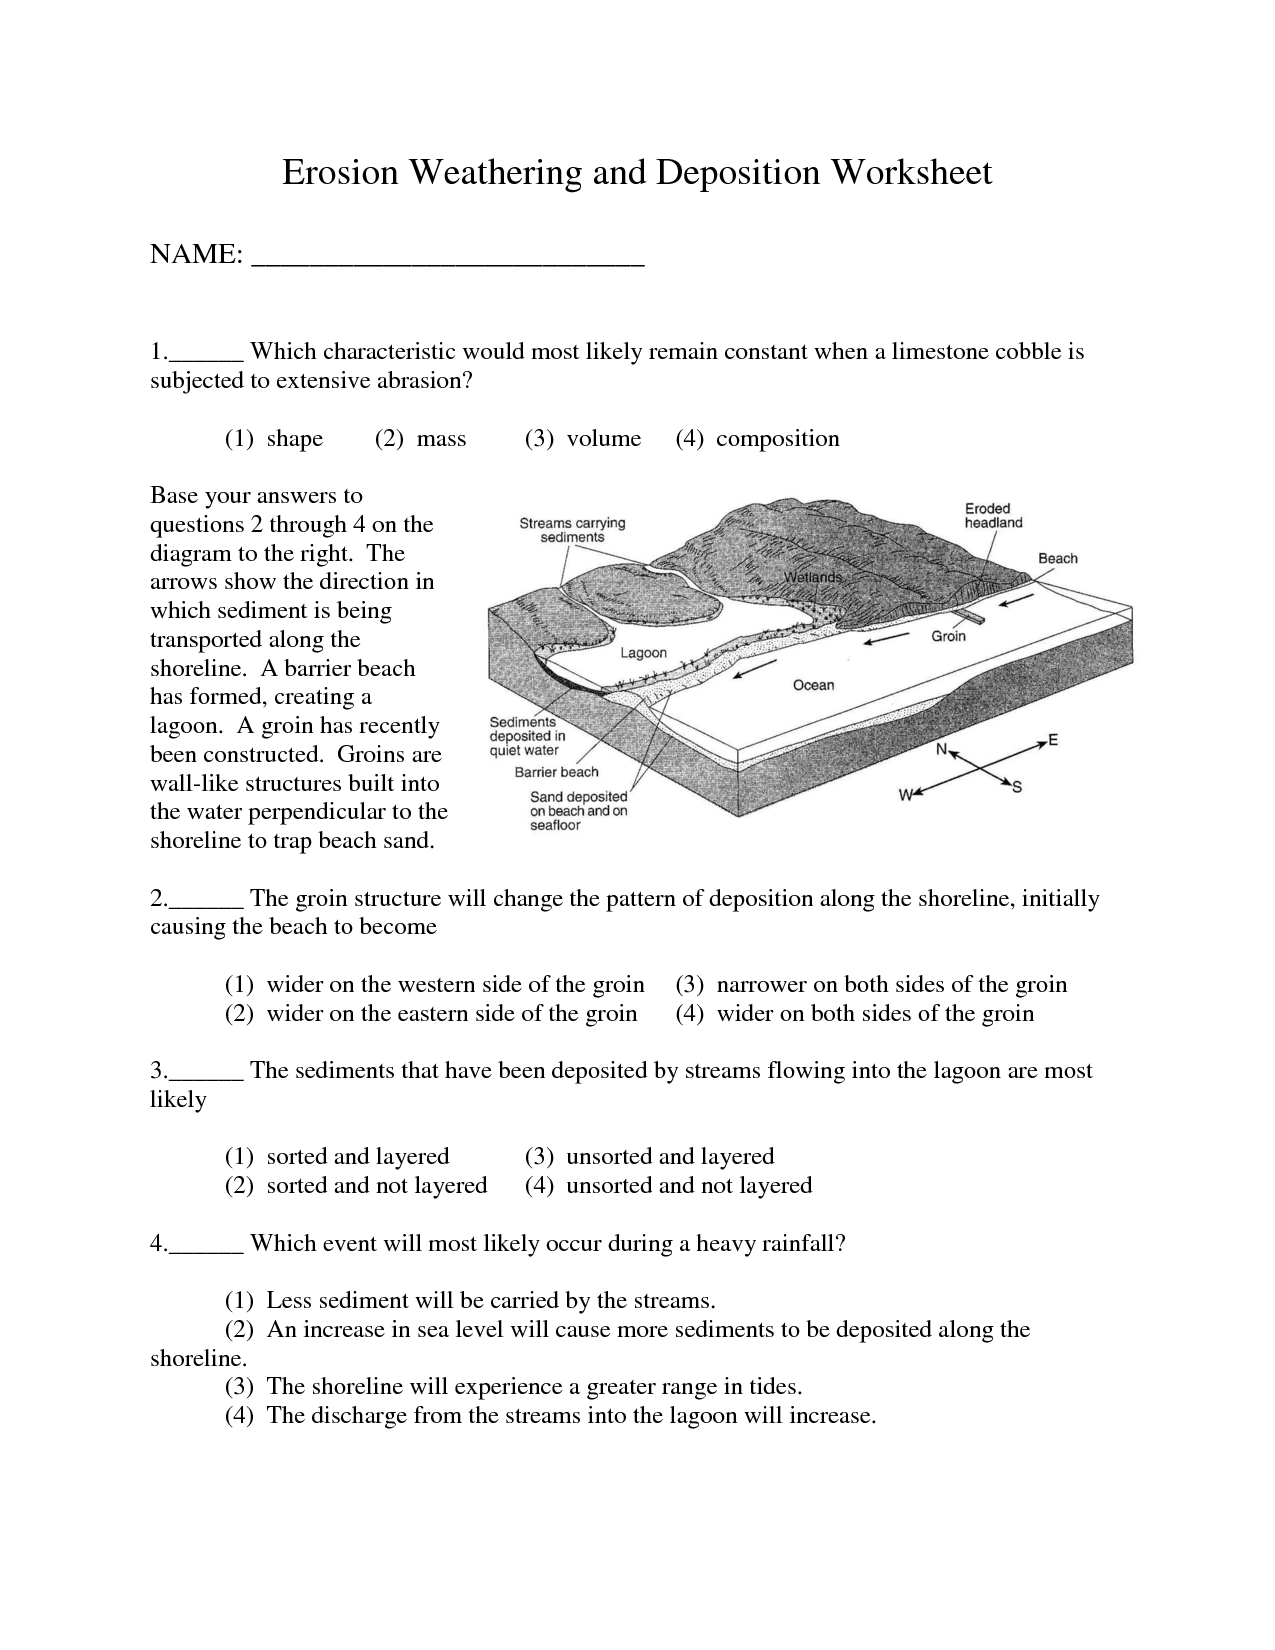 Weathering Erosion Deposition Worksheet Image